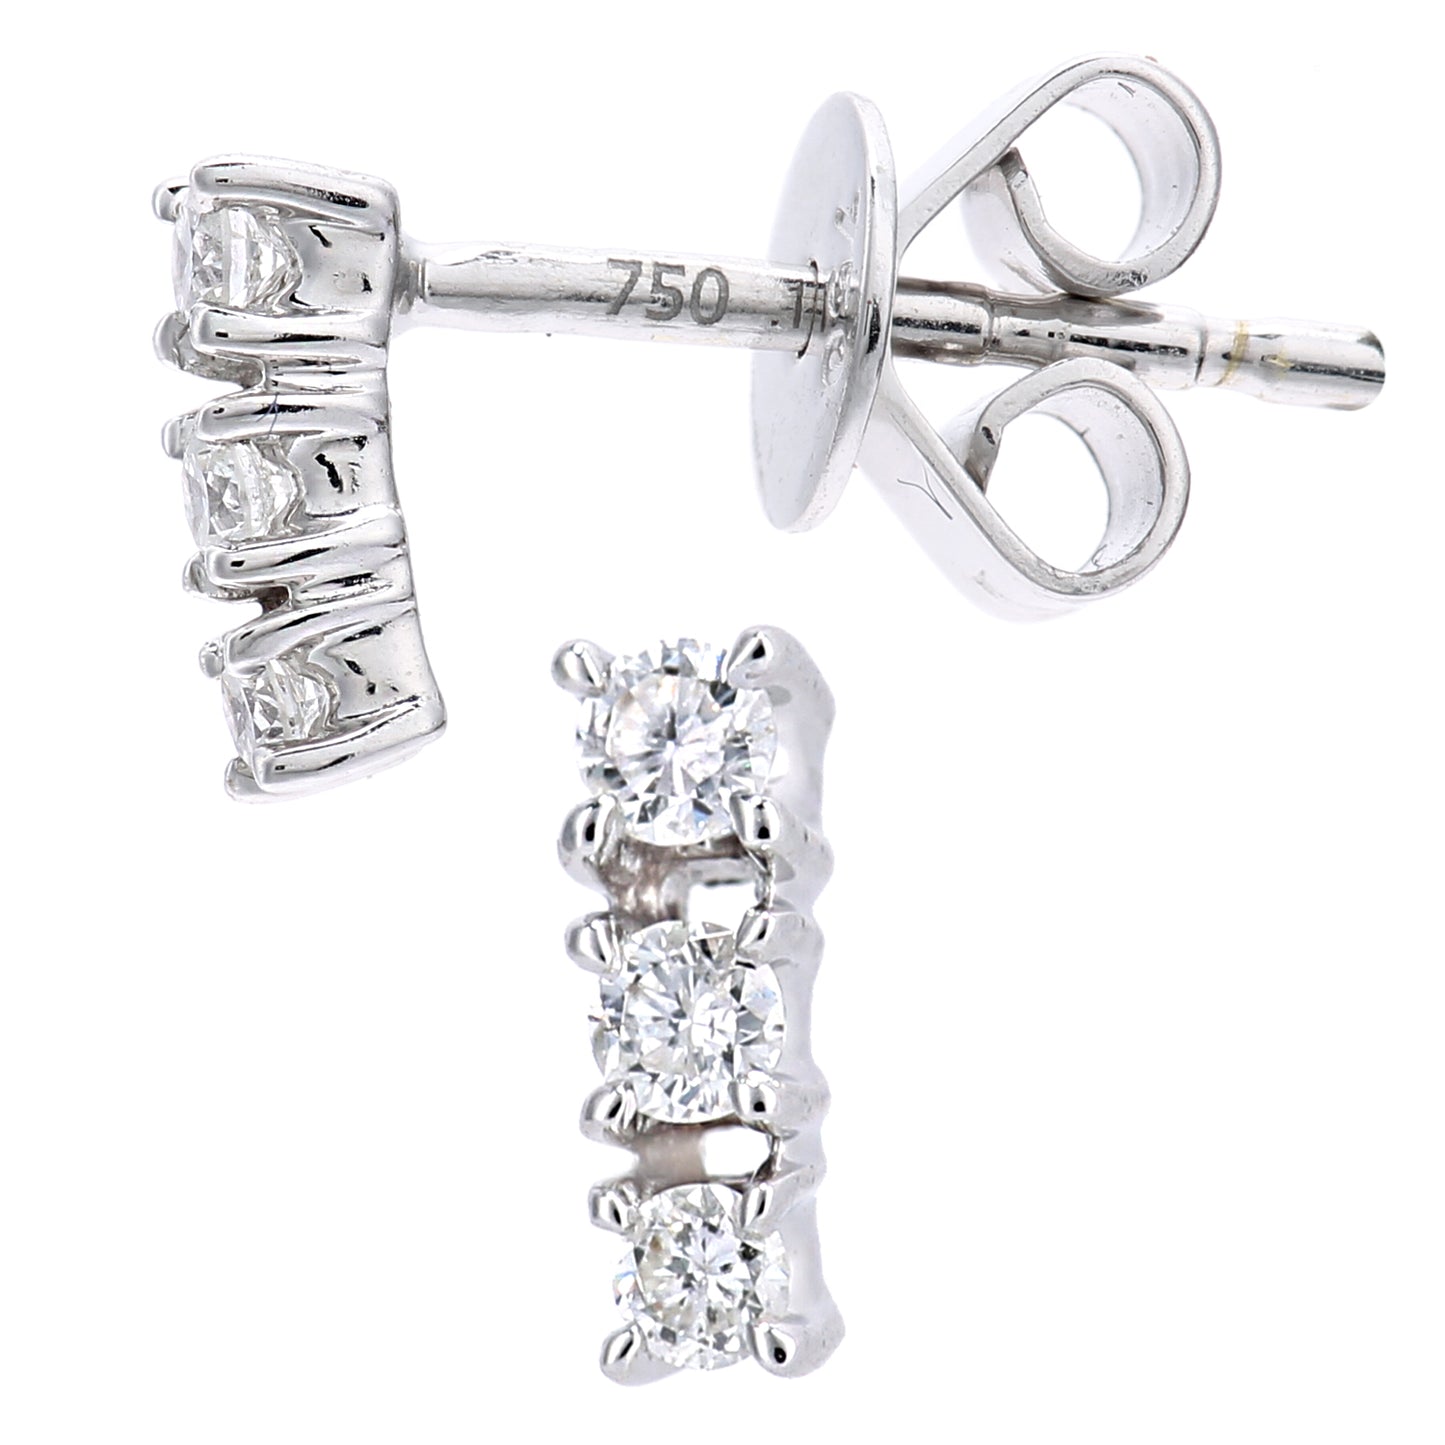 18ct White Gold  Round 13pts Diamond Trilogy Stud Earrings - DE1AXL662W18